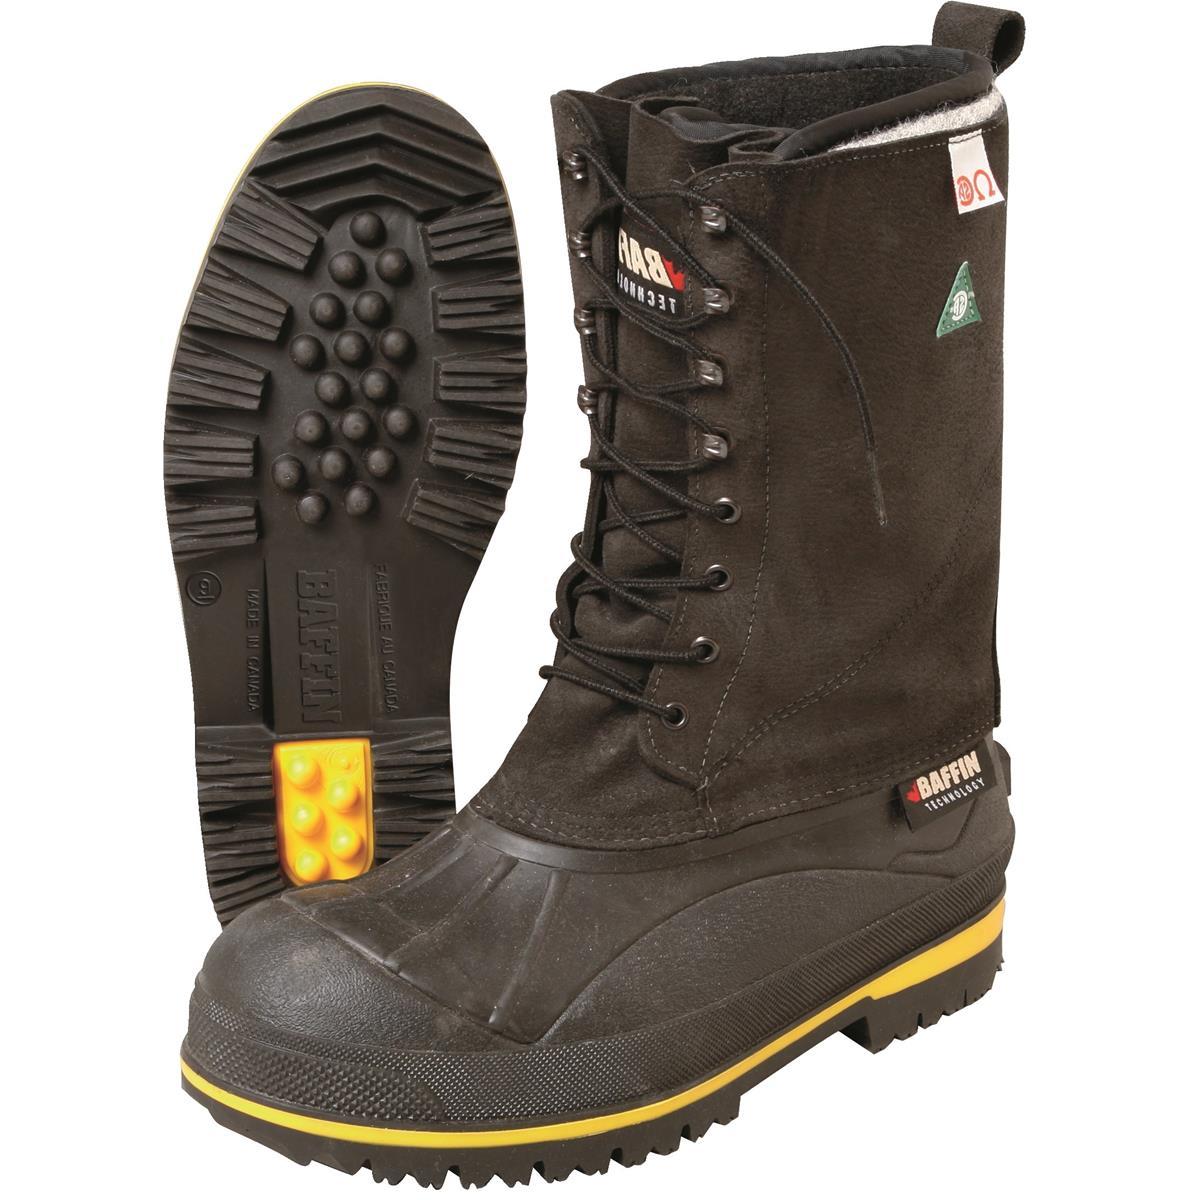 baffin technology steel toe boots